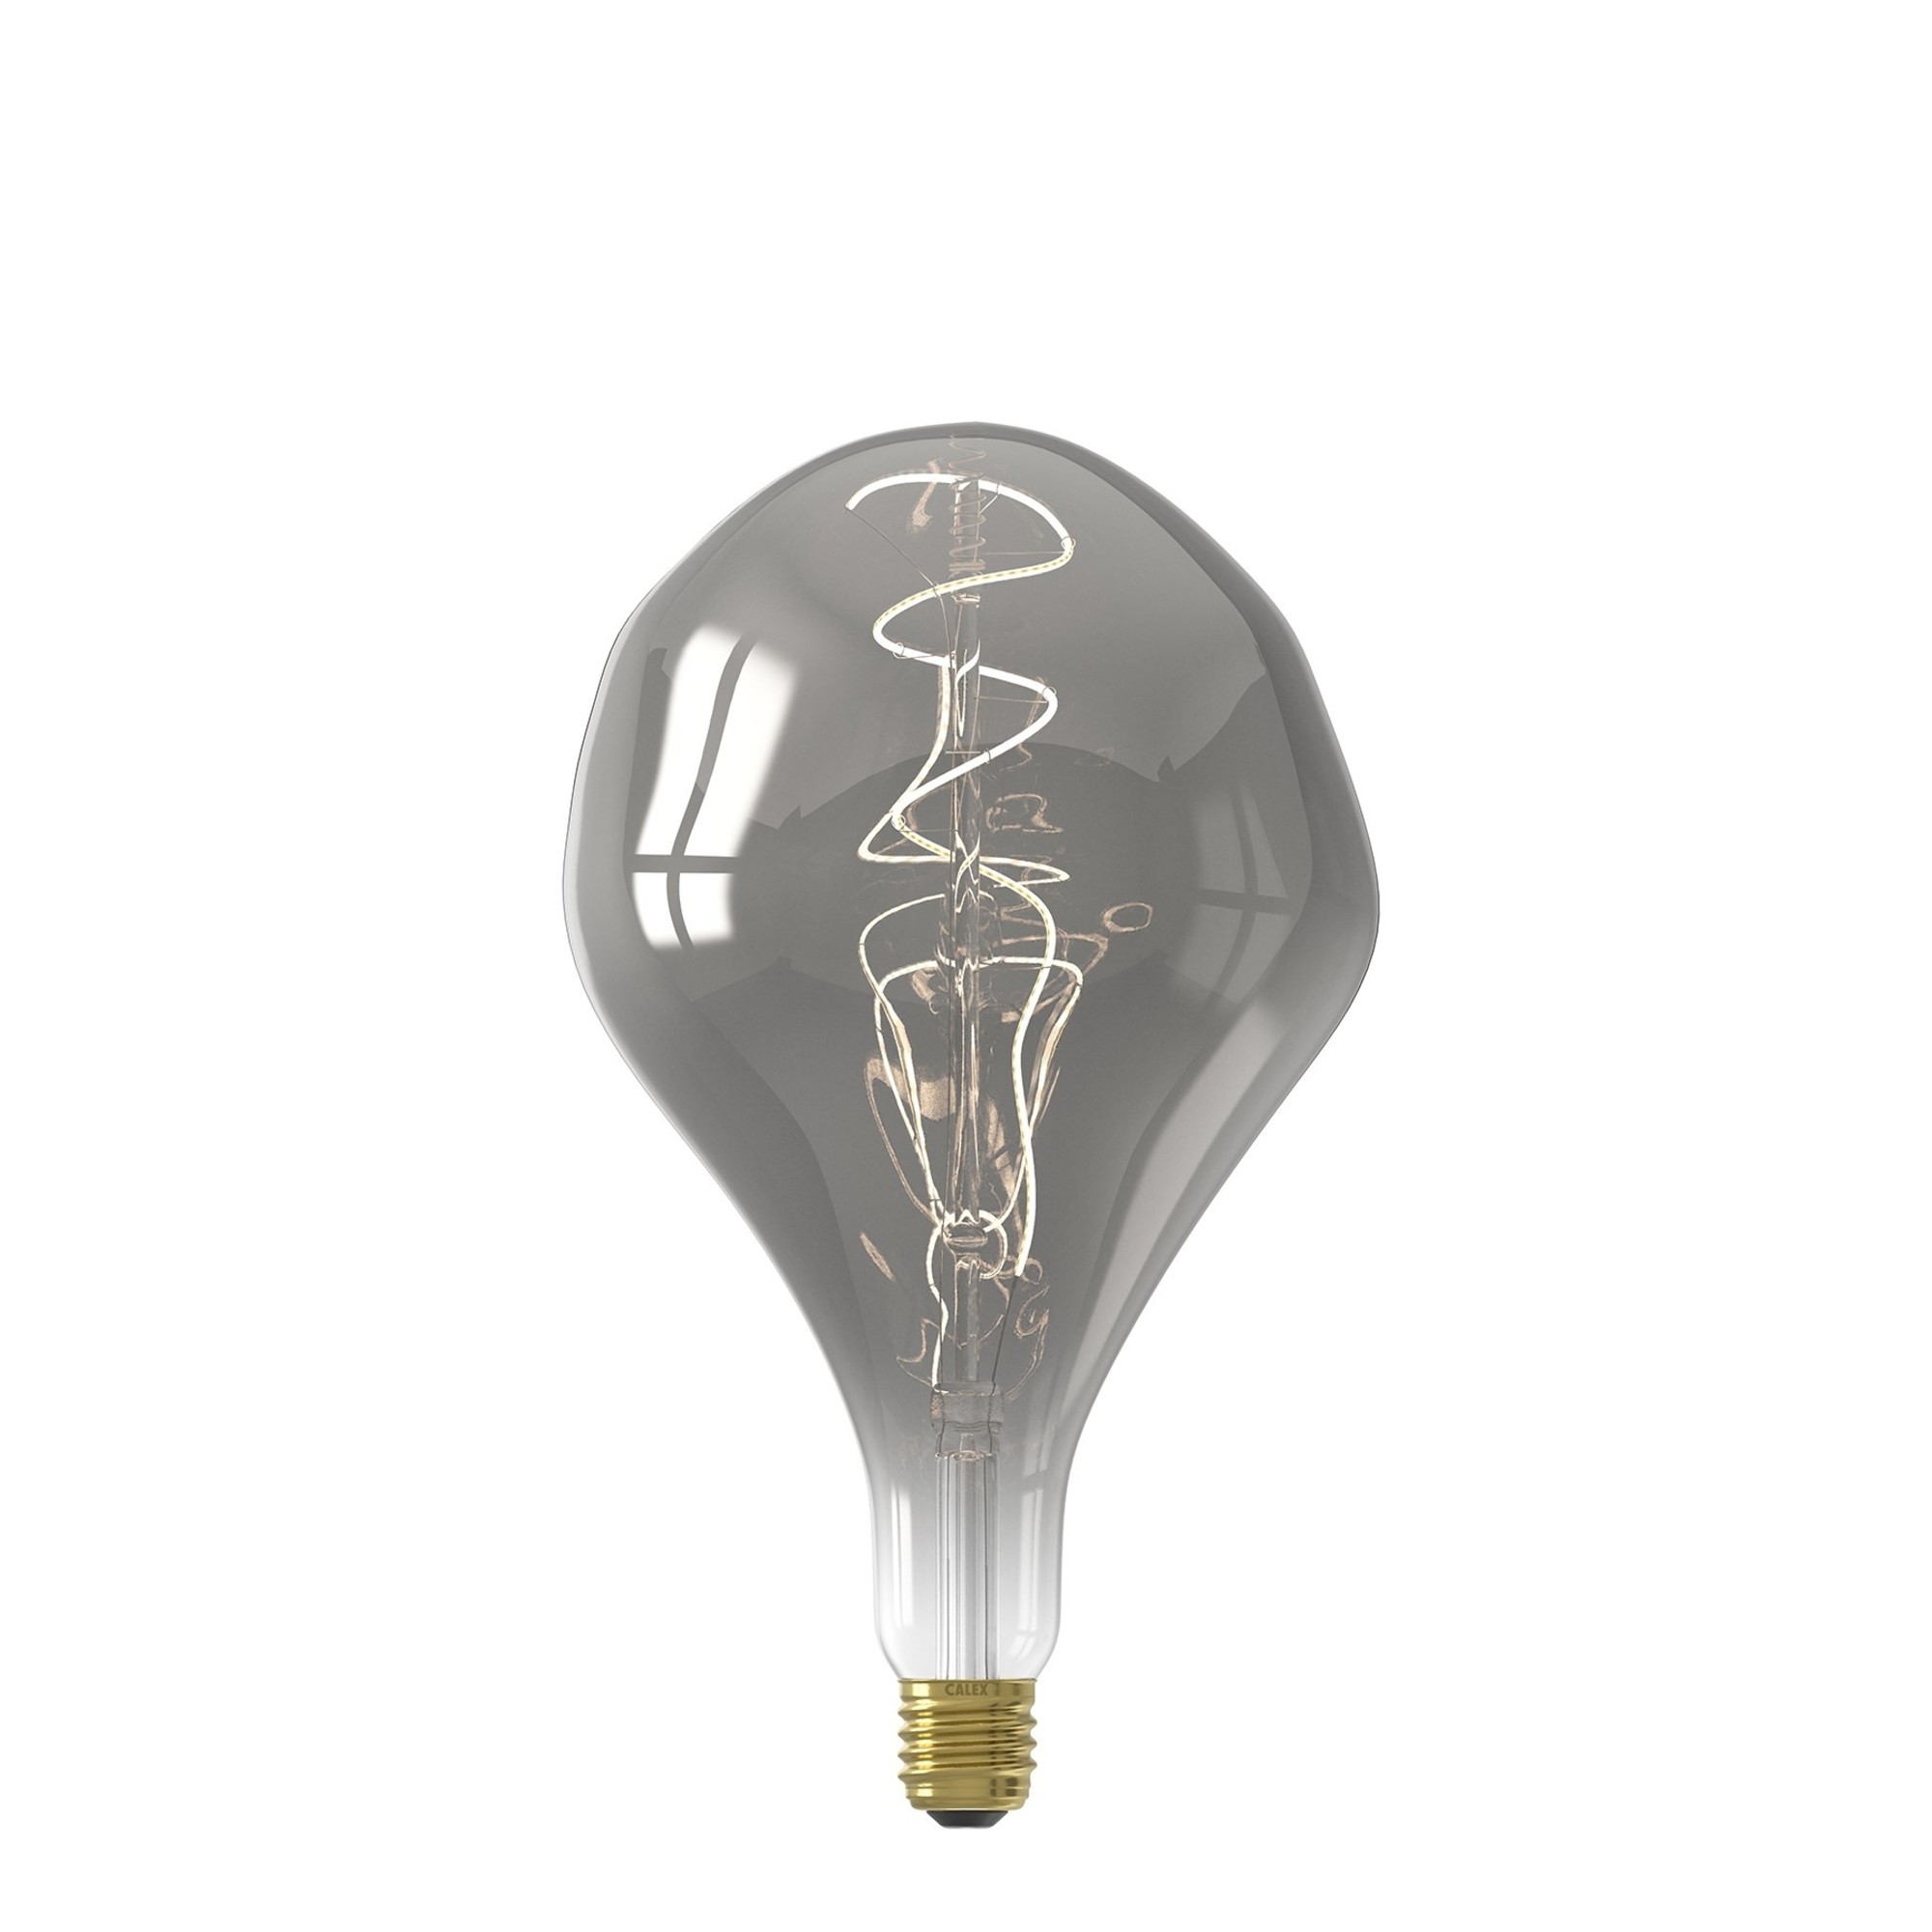 dat is alles royalty Stoel Calex Organic Evo LED Lamp Ø165 - E27 - 90 Lm - Titanium - Lightexpert.nl